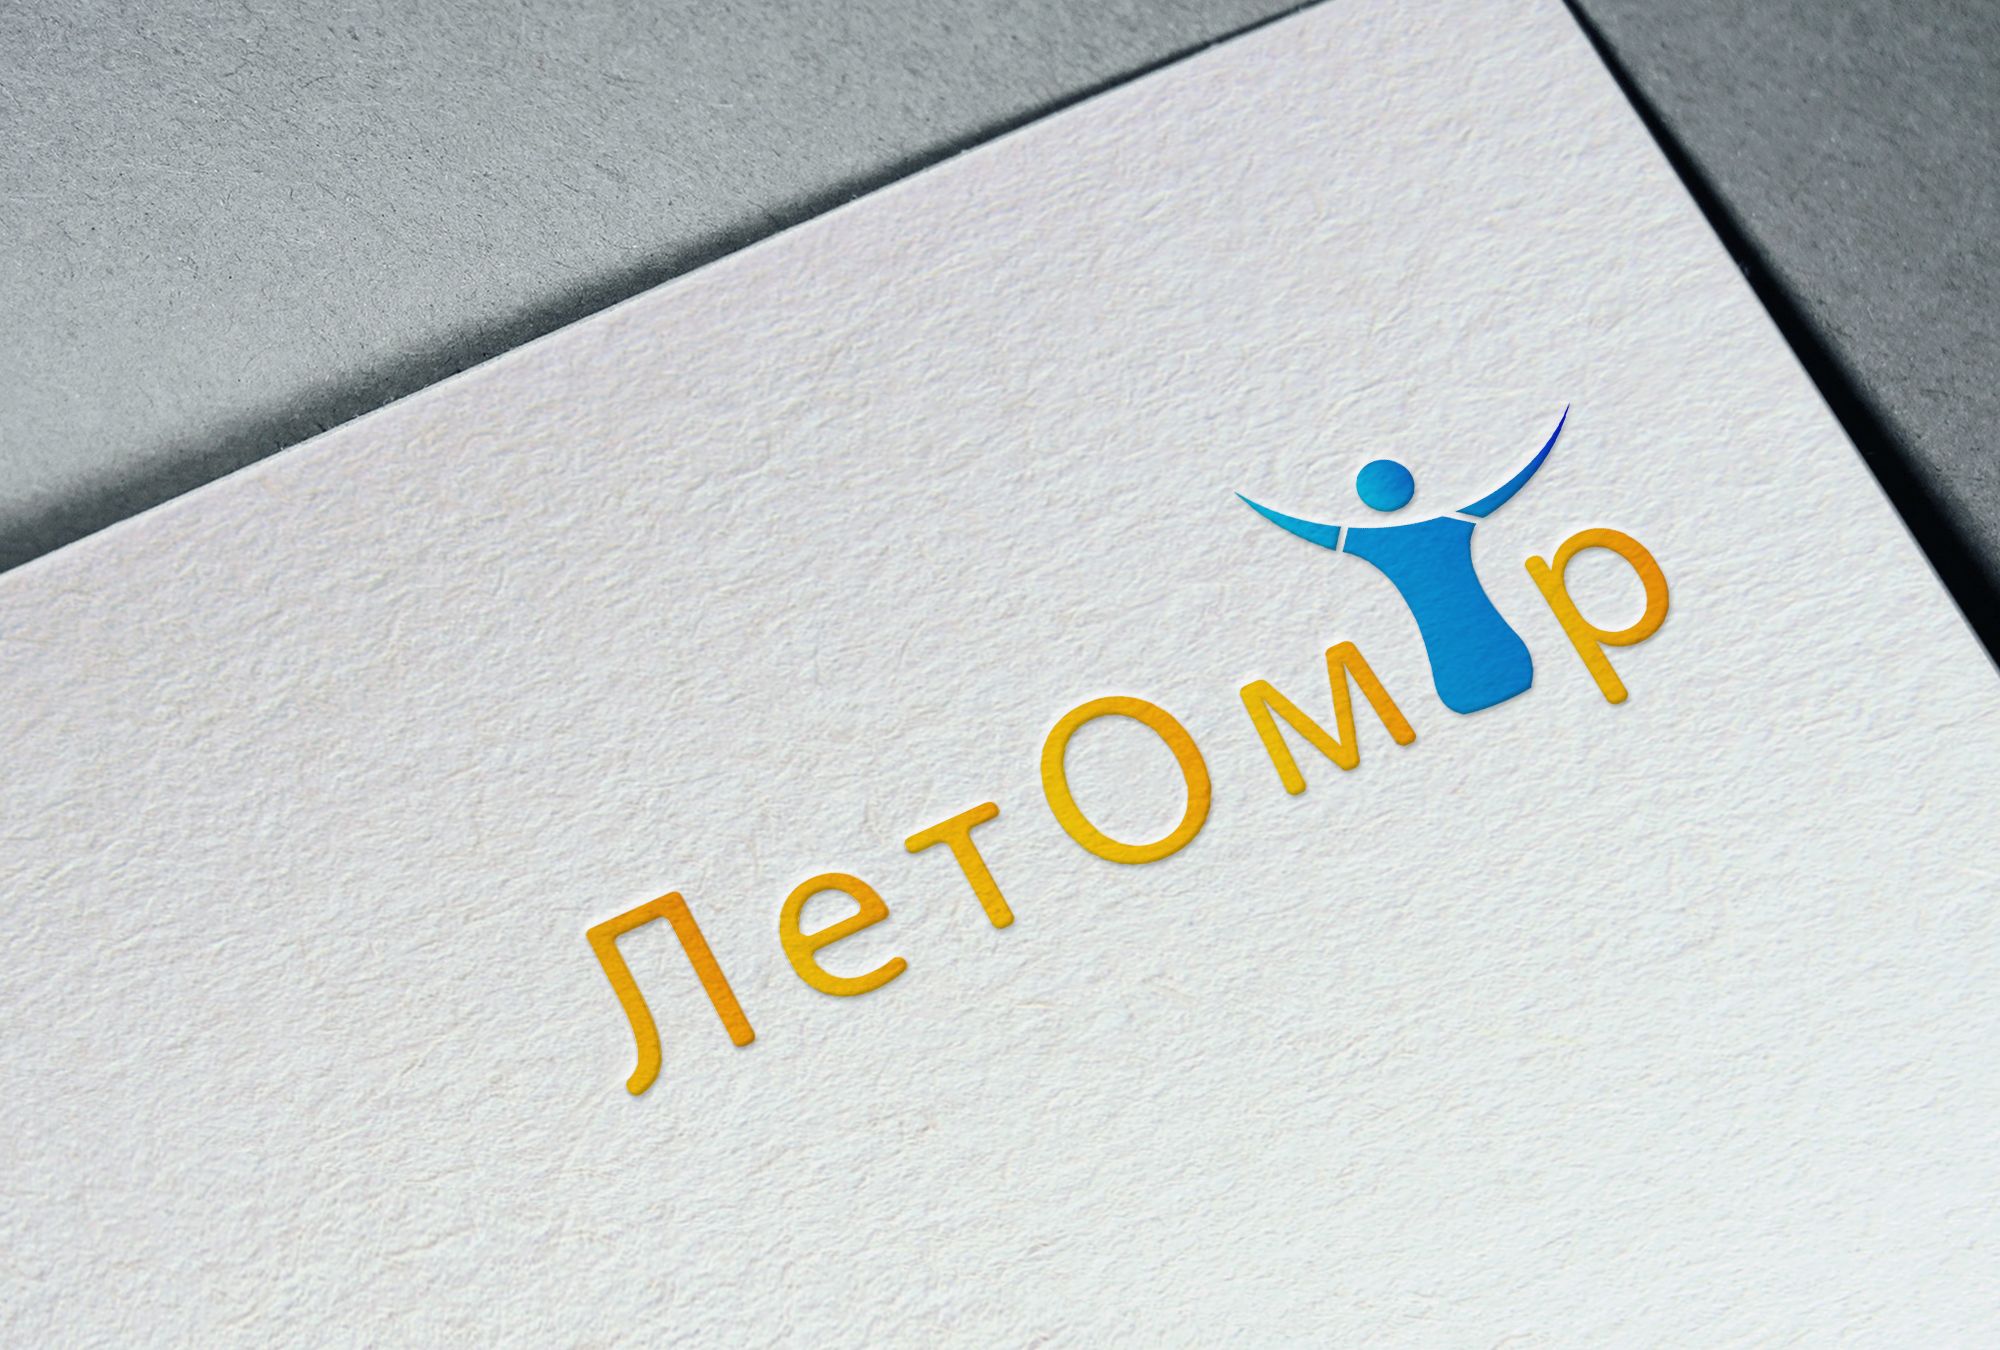 Логотип для летОмiр - дизайнер Meloman